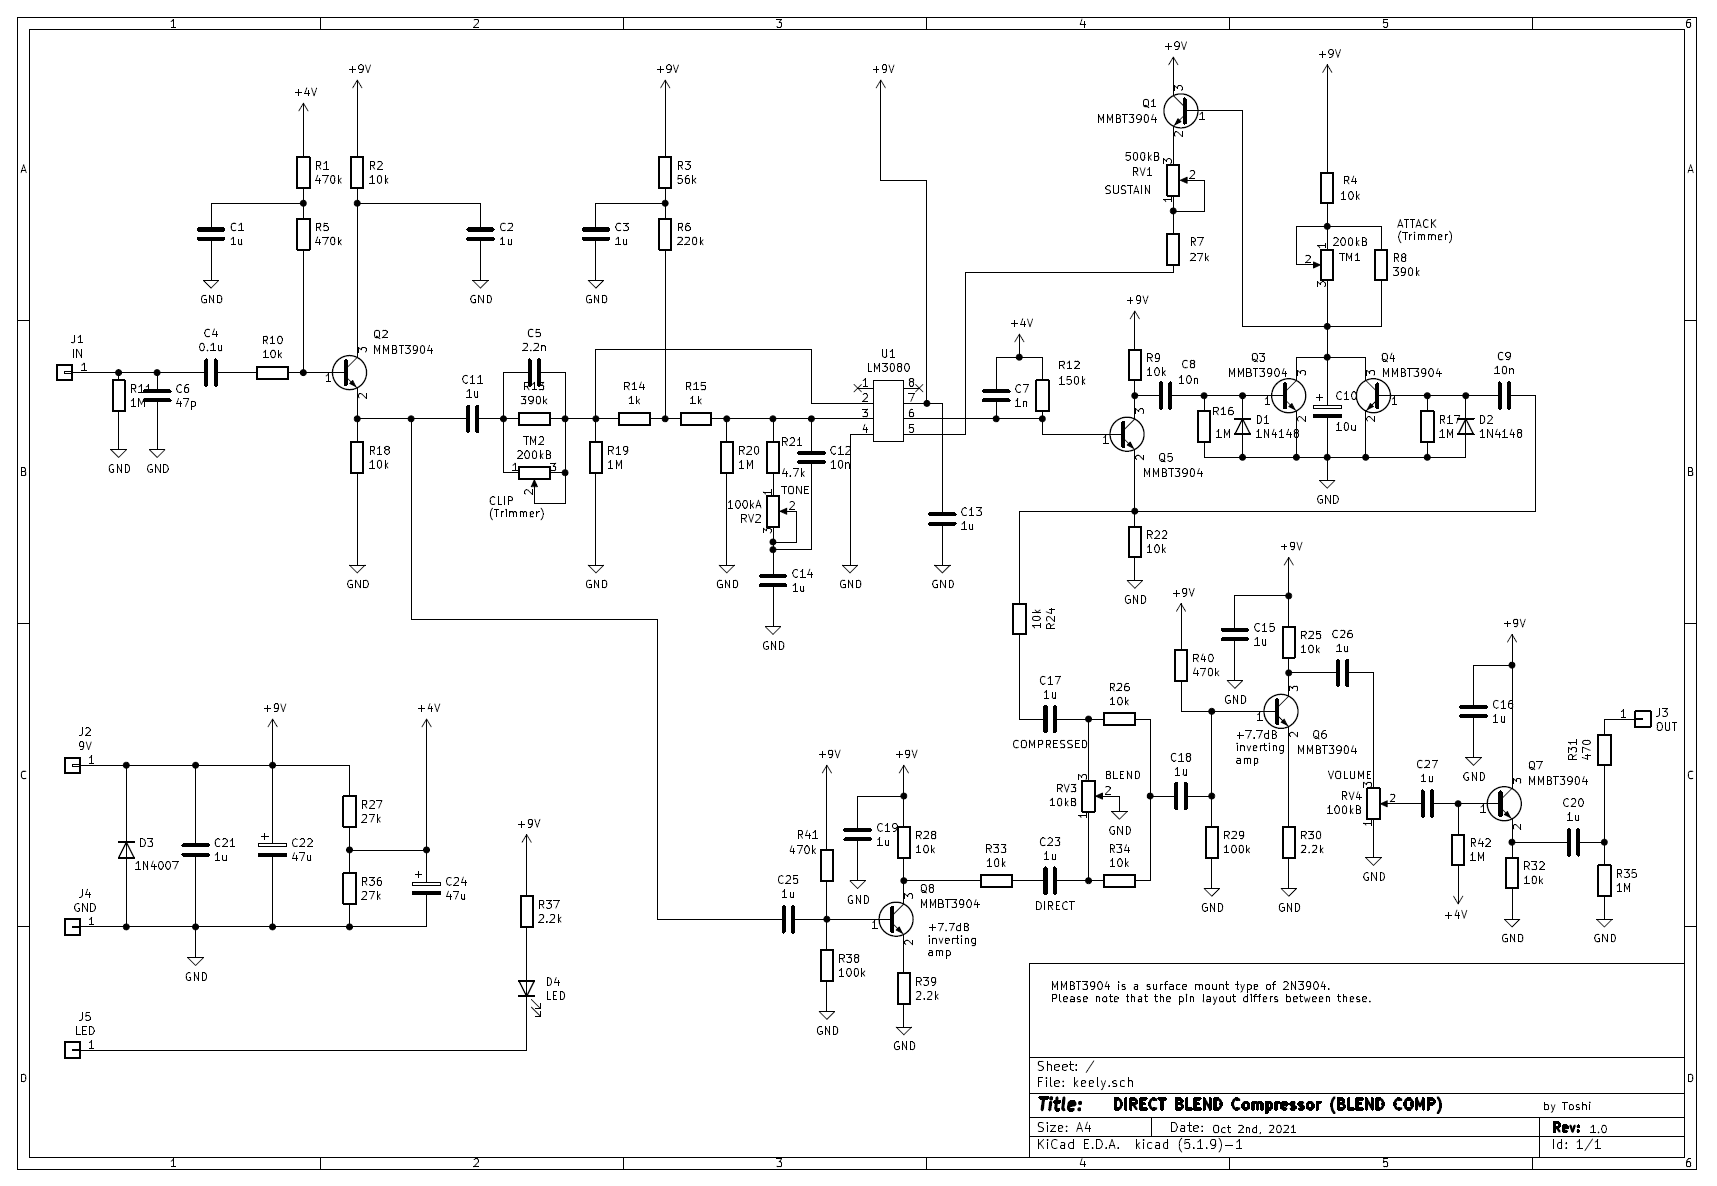 Direct blend compressor schematic